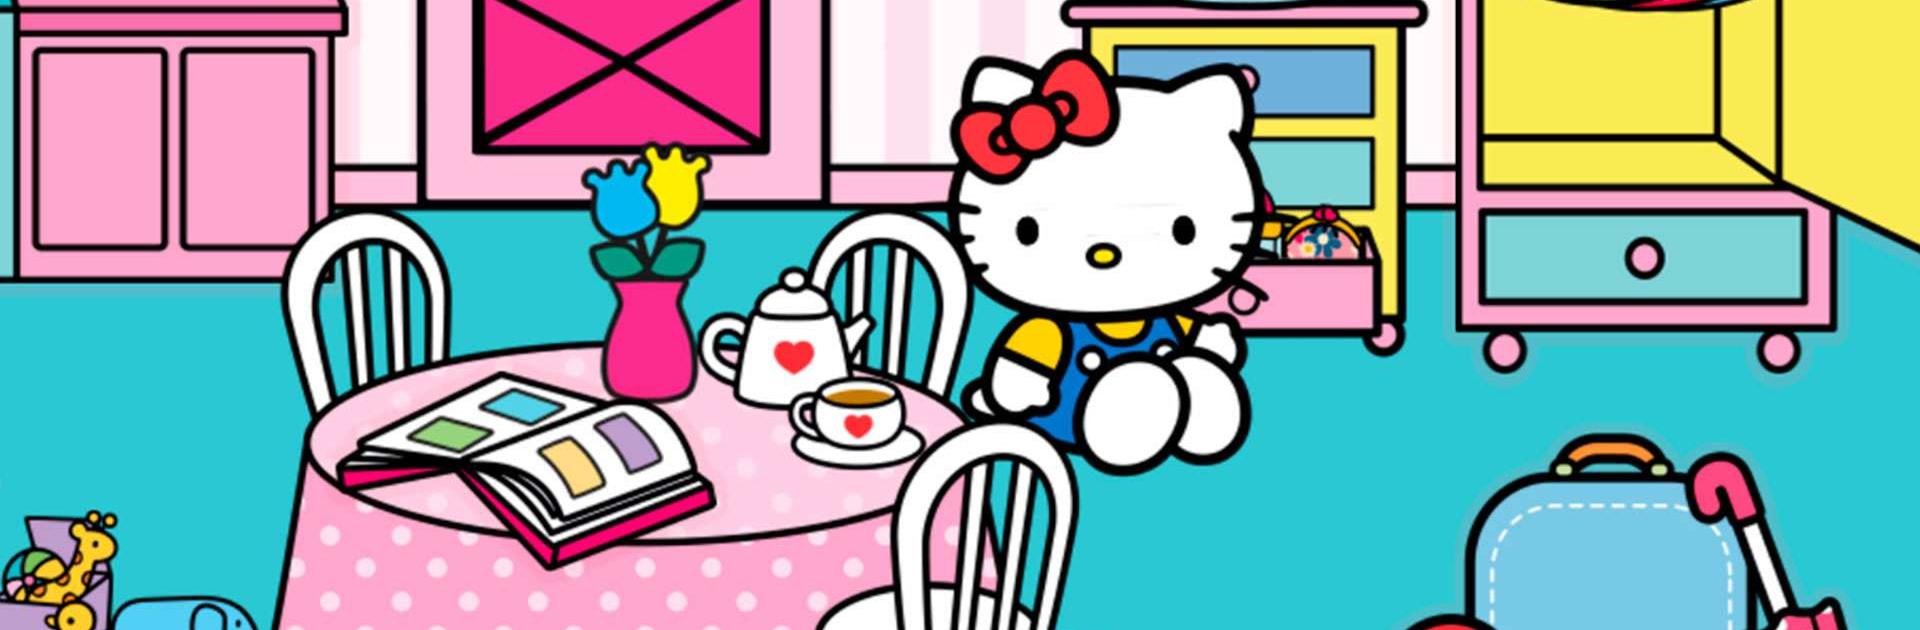 Play Hello Kitty Around The World Online